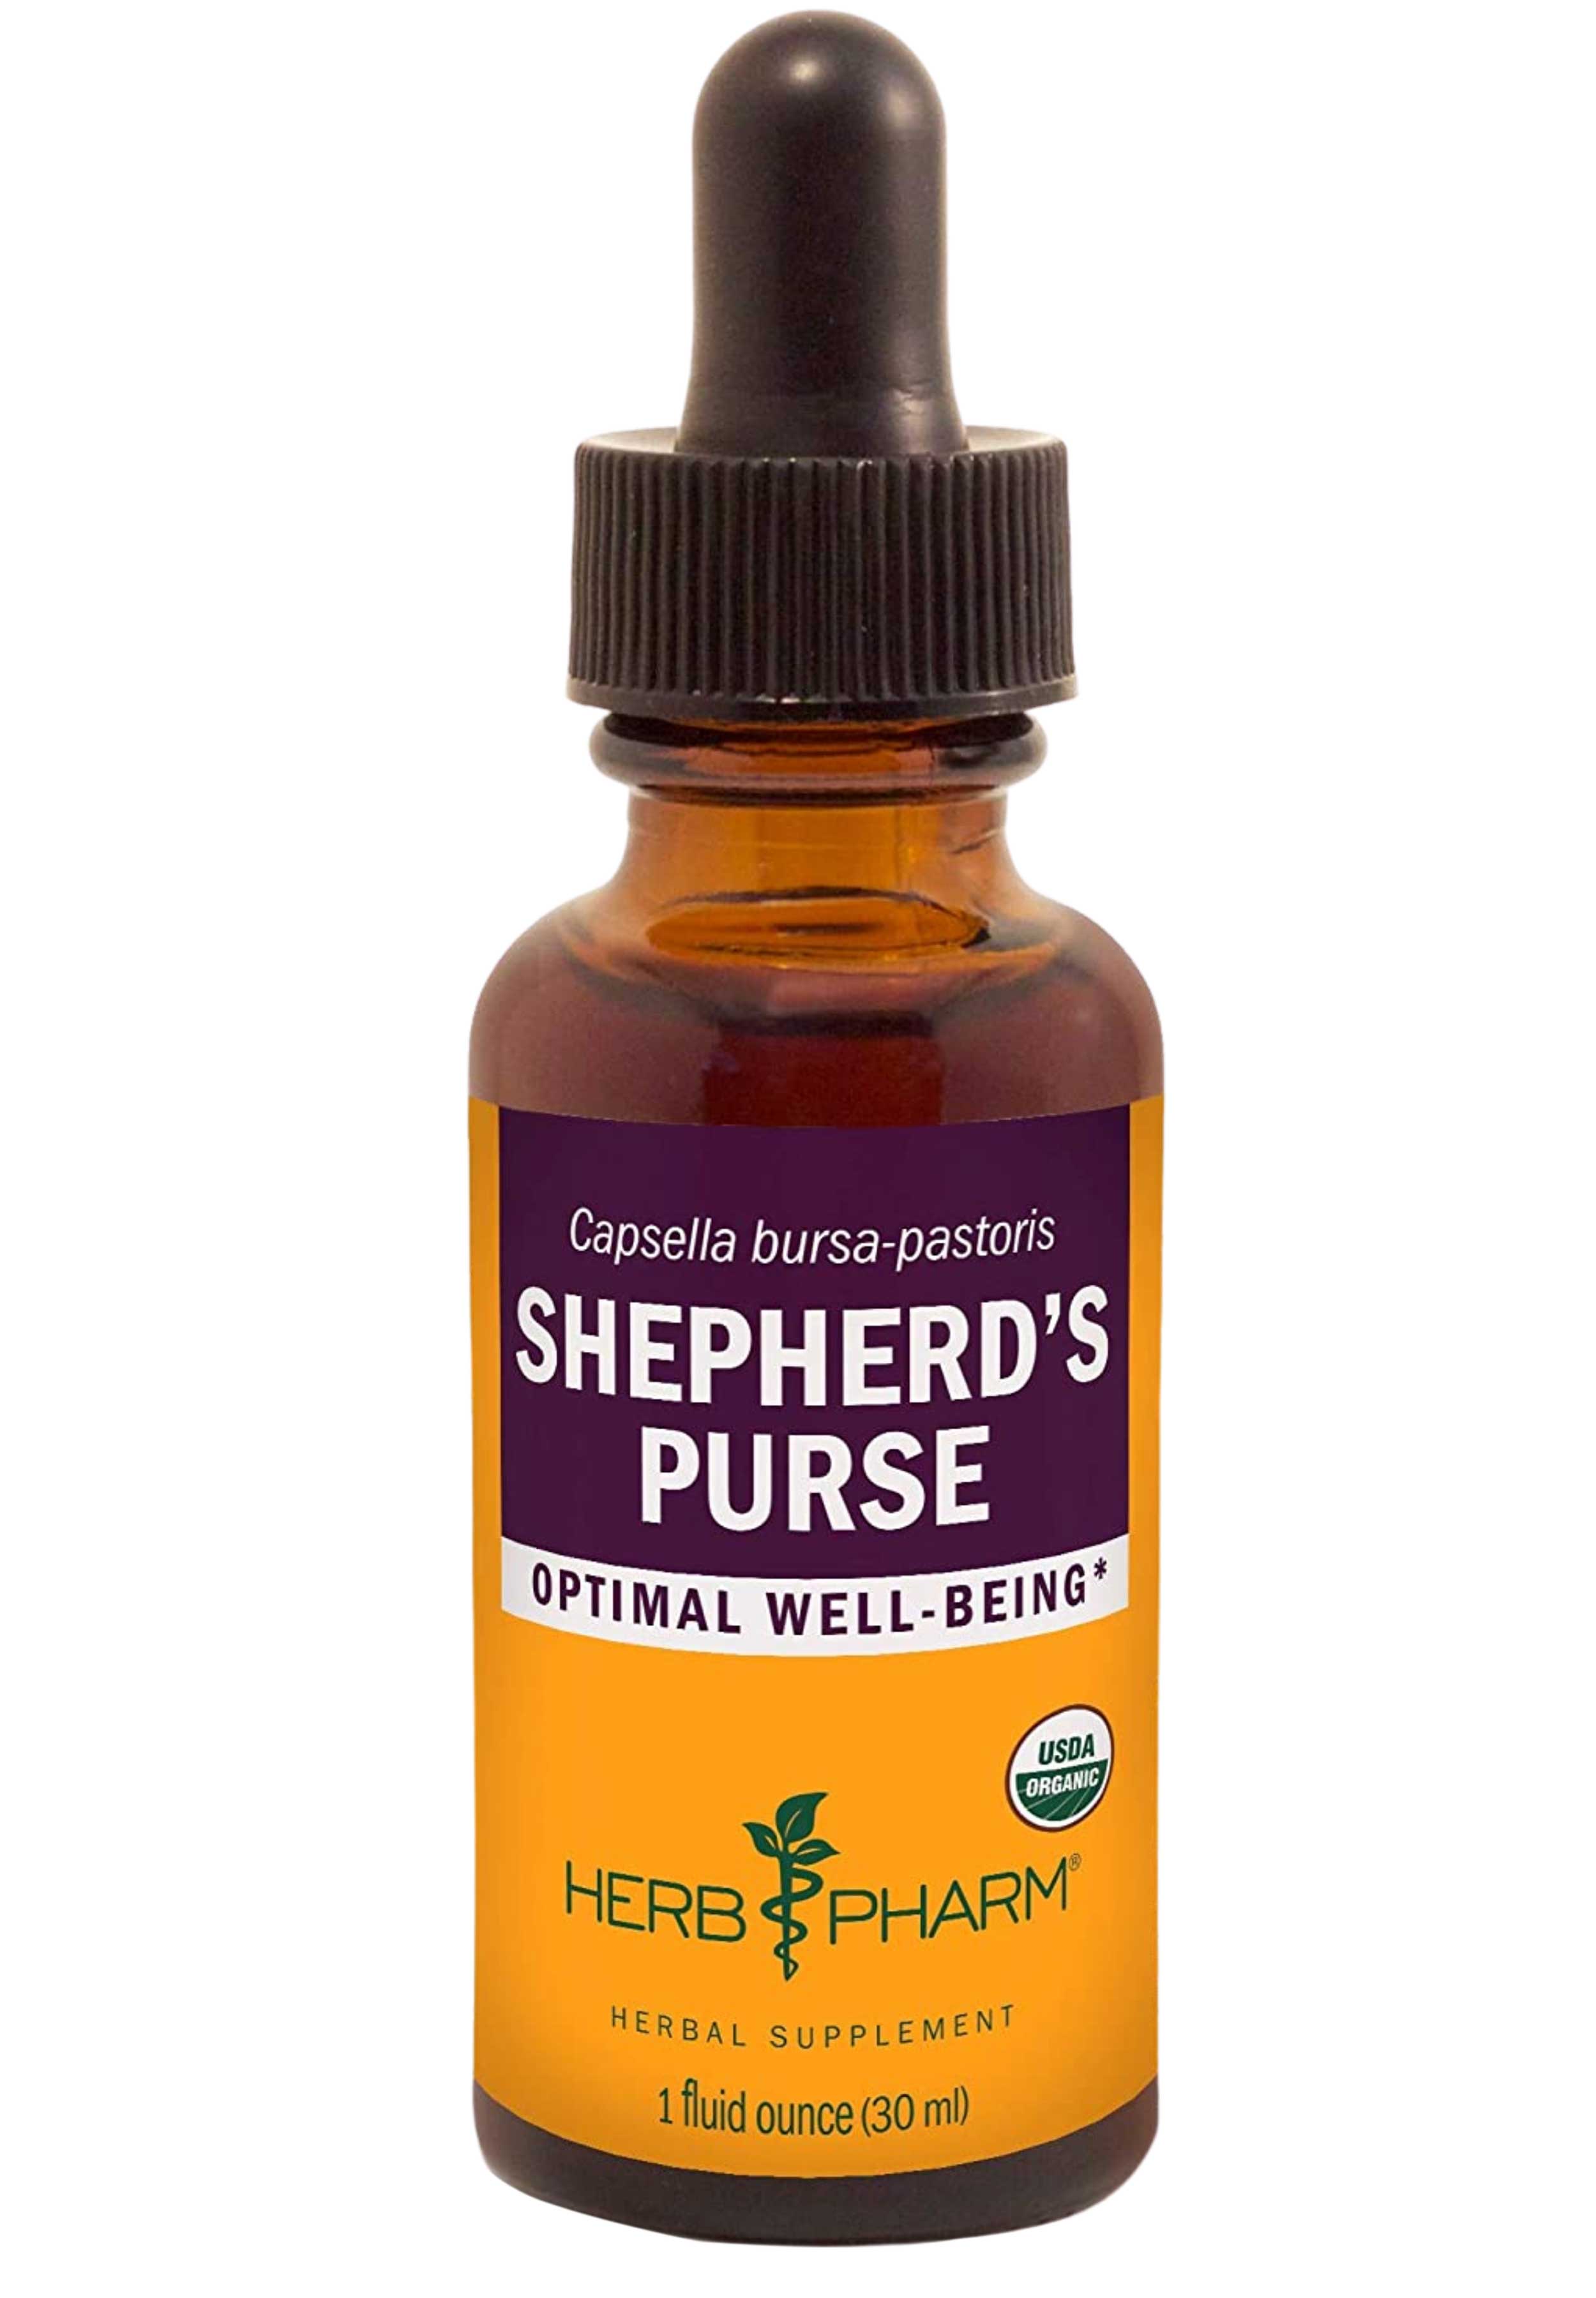 Herb Pharm Shepherd's Purse